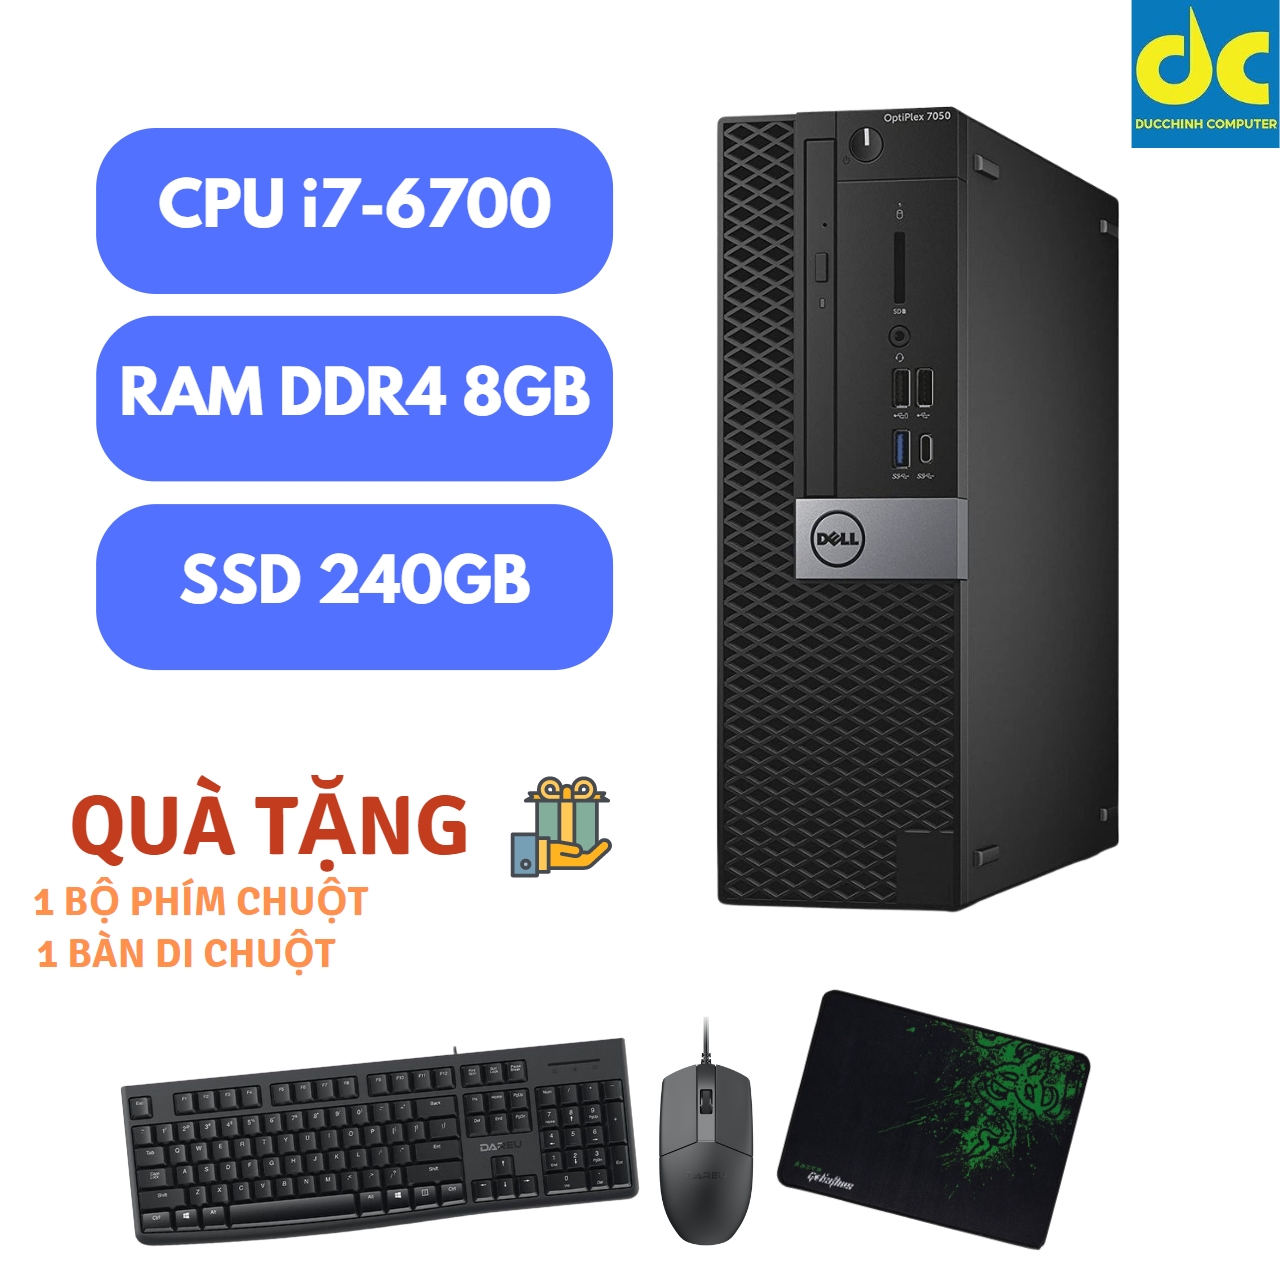 Máy Tính Dell Optiplex 3050/5050/7050, Chip i7-6700, Ram 8GB, SSD 240GB, DVD